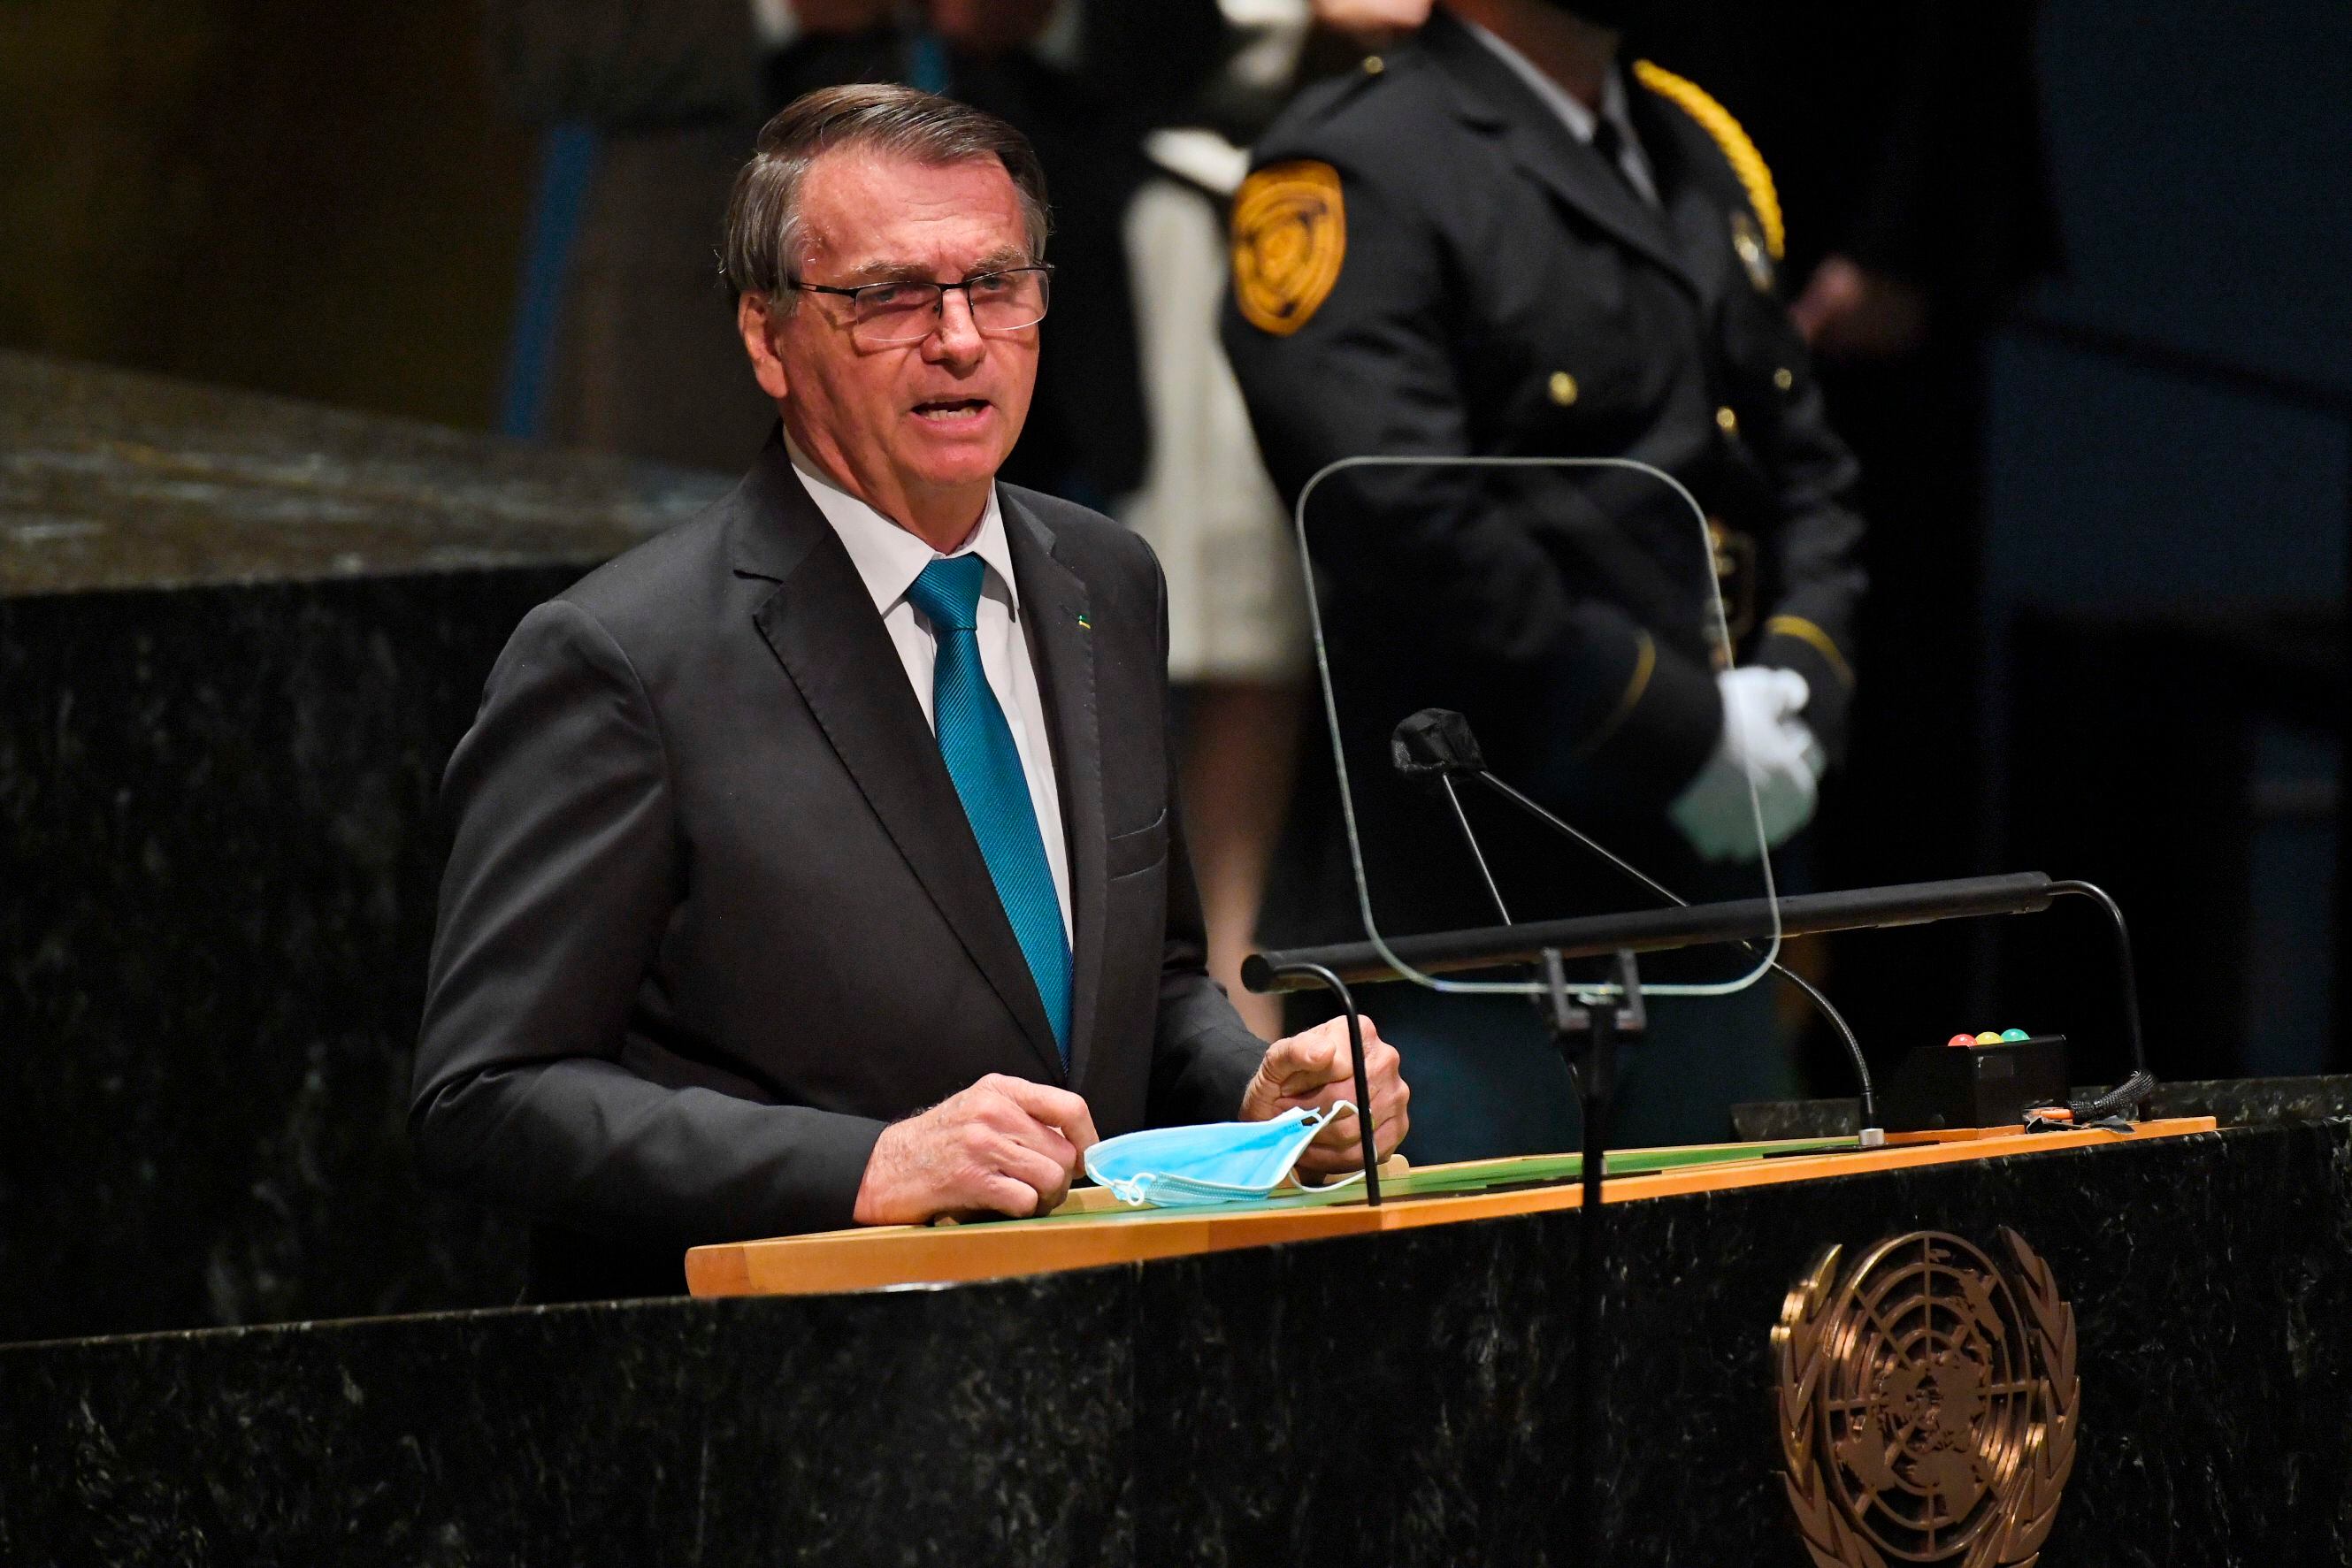 Asamblea General: Bolsonaro se pone ‘a la defensiva’ en cumbre de la ONU